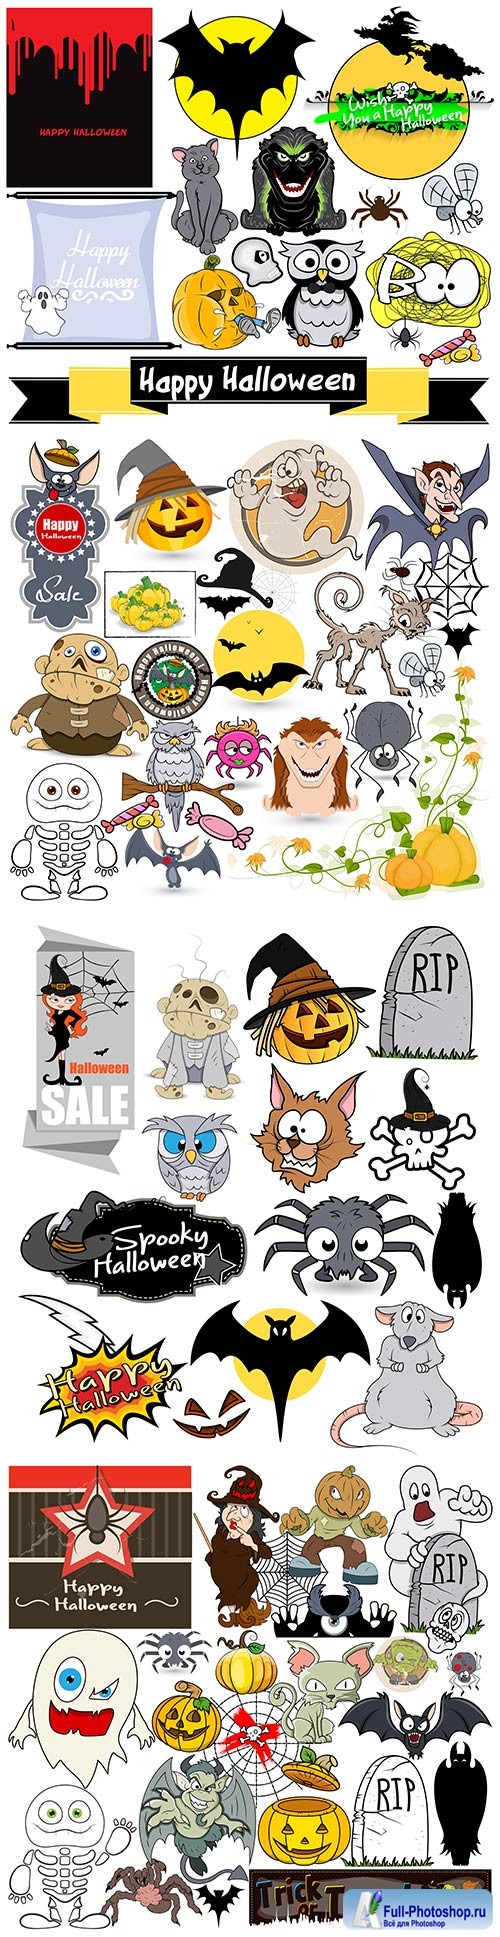 Halloween cartoon characters vector illustration